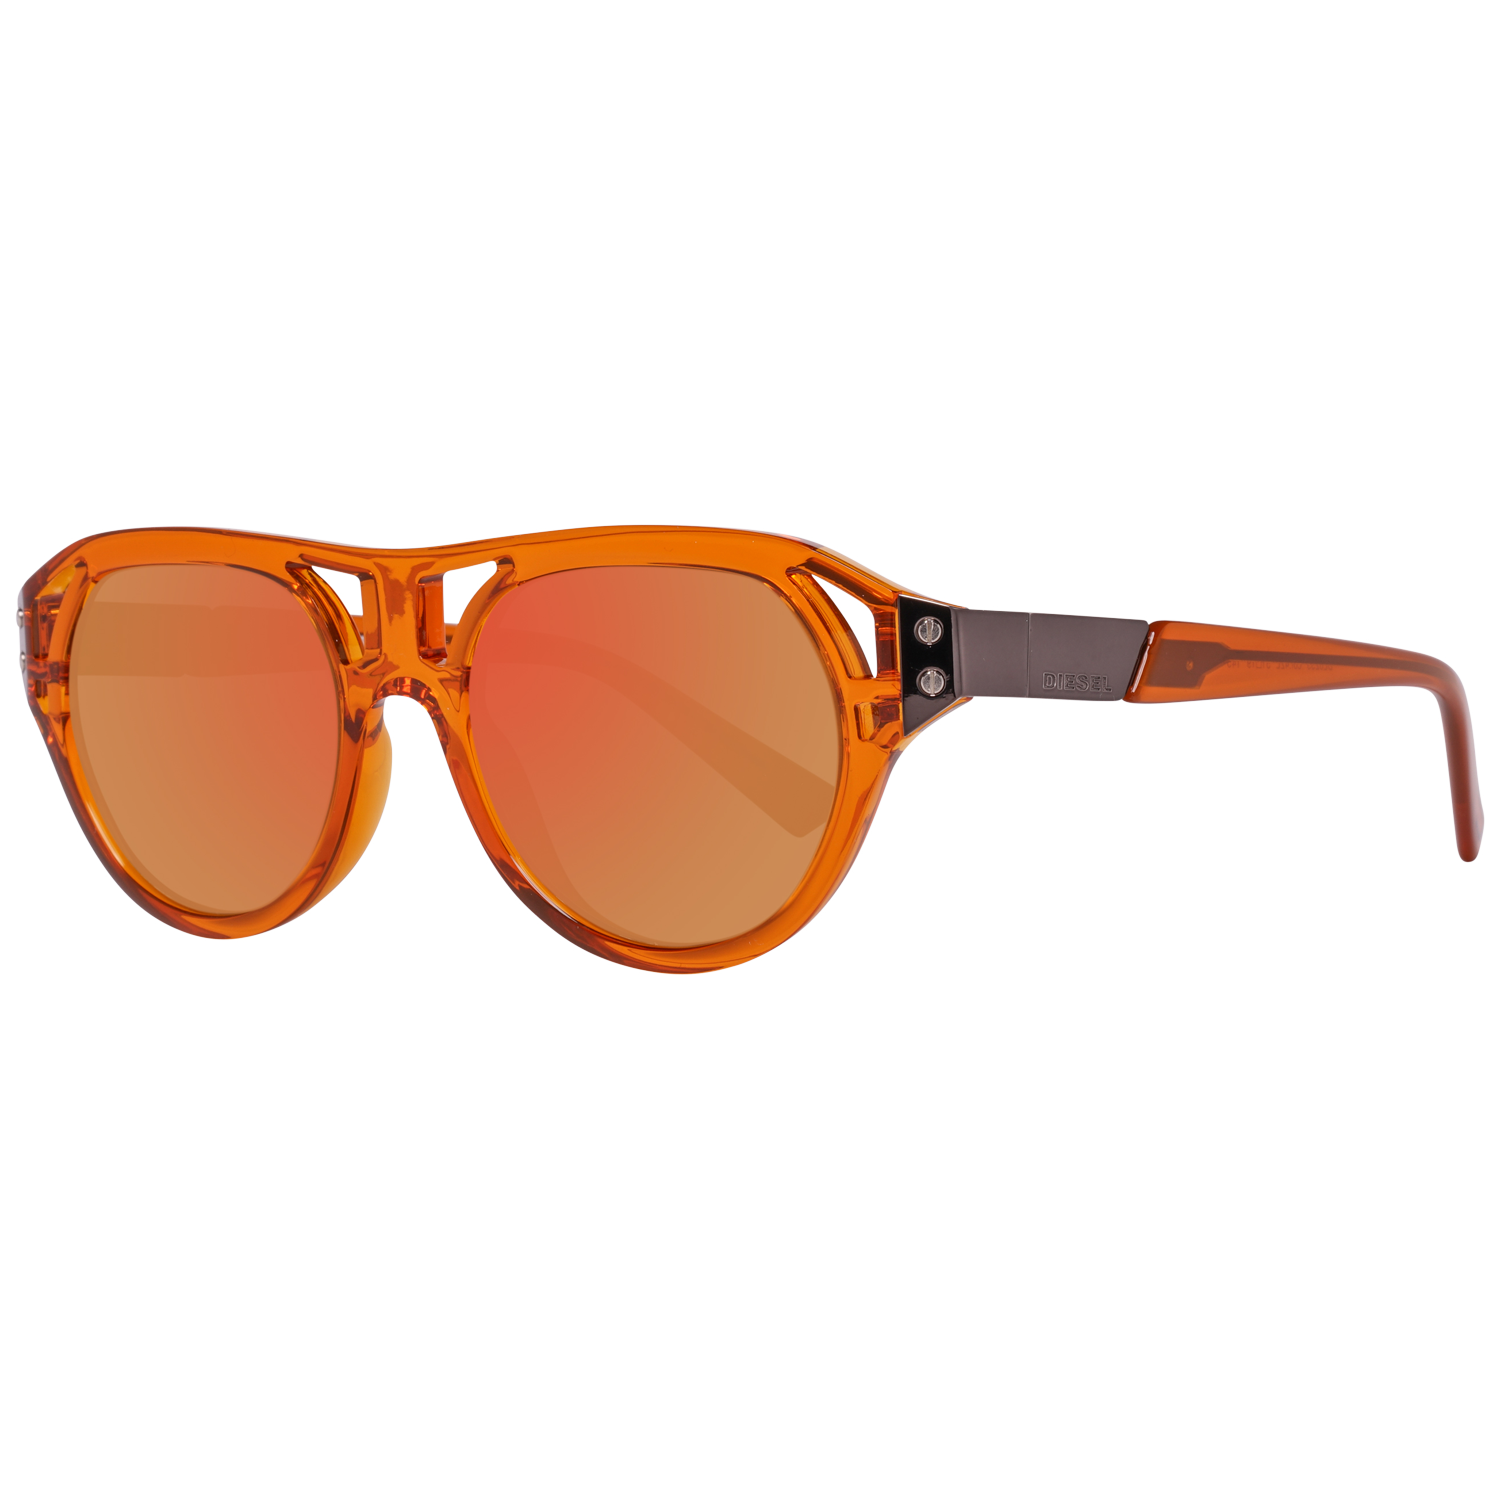 Diesel Sunglasses DL0233 42L 51